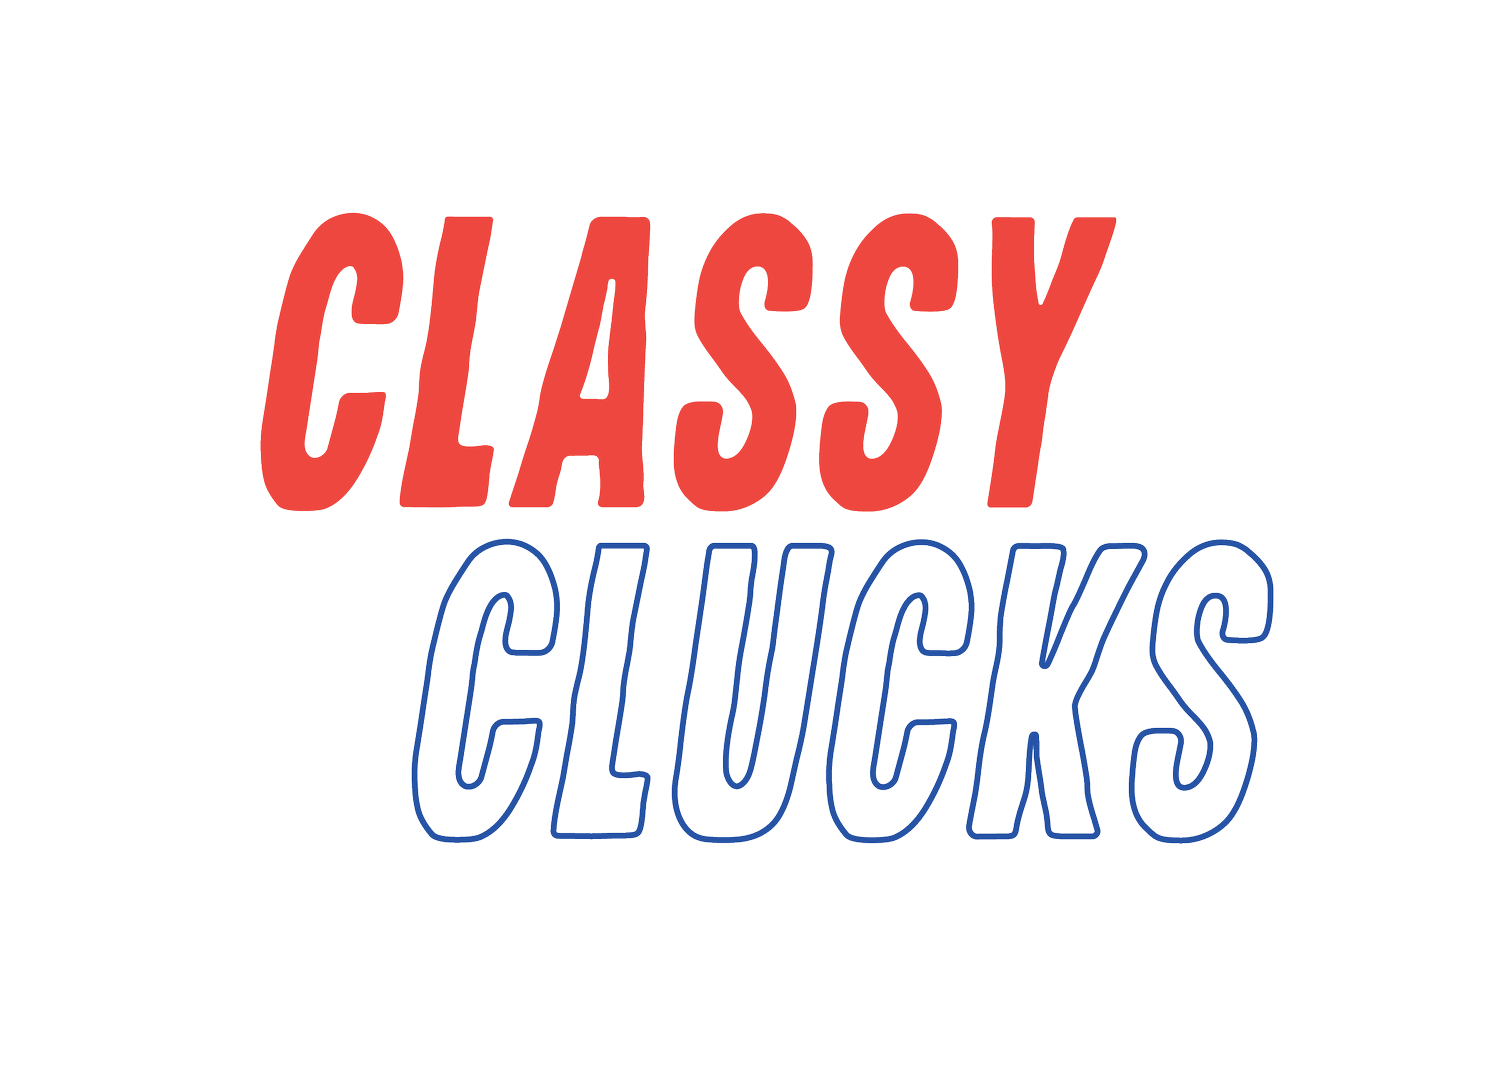 Classy Clucks